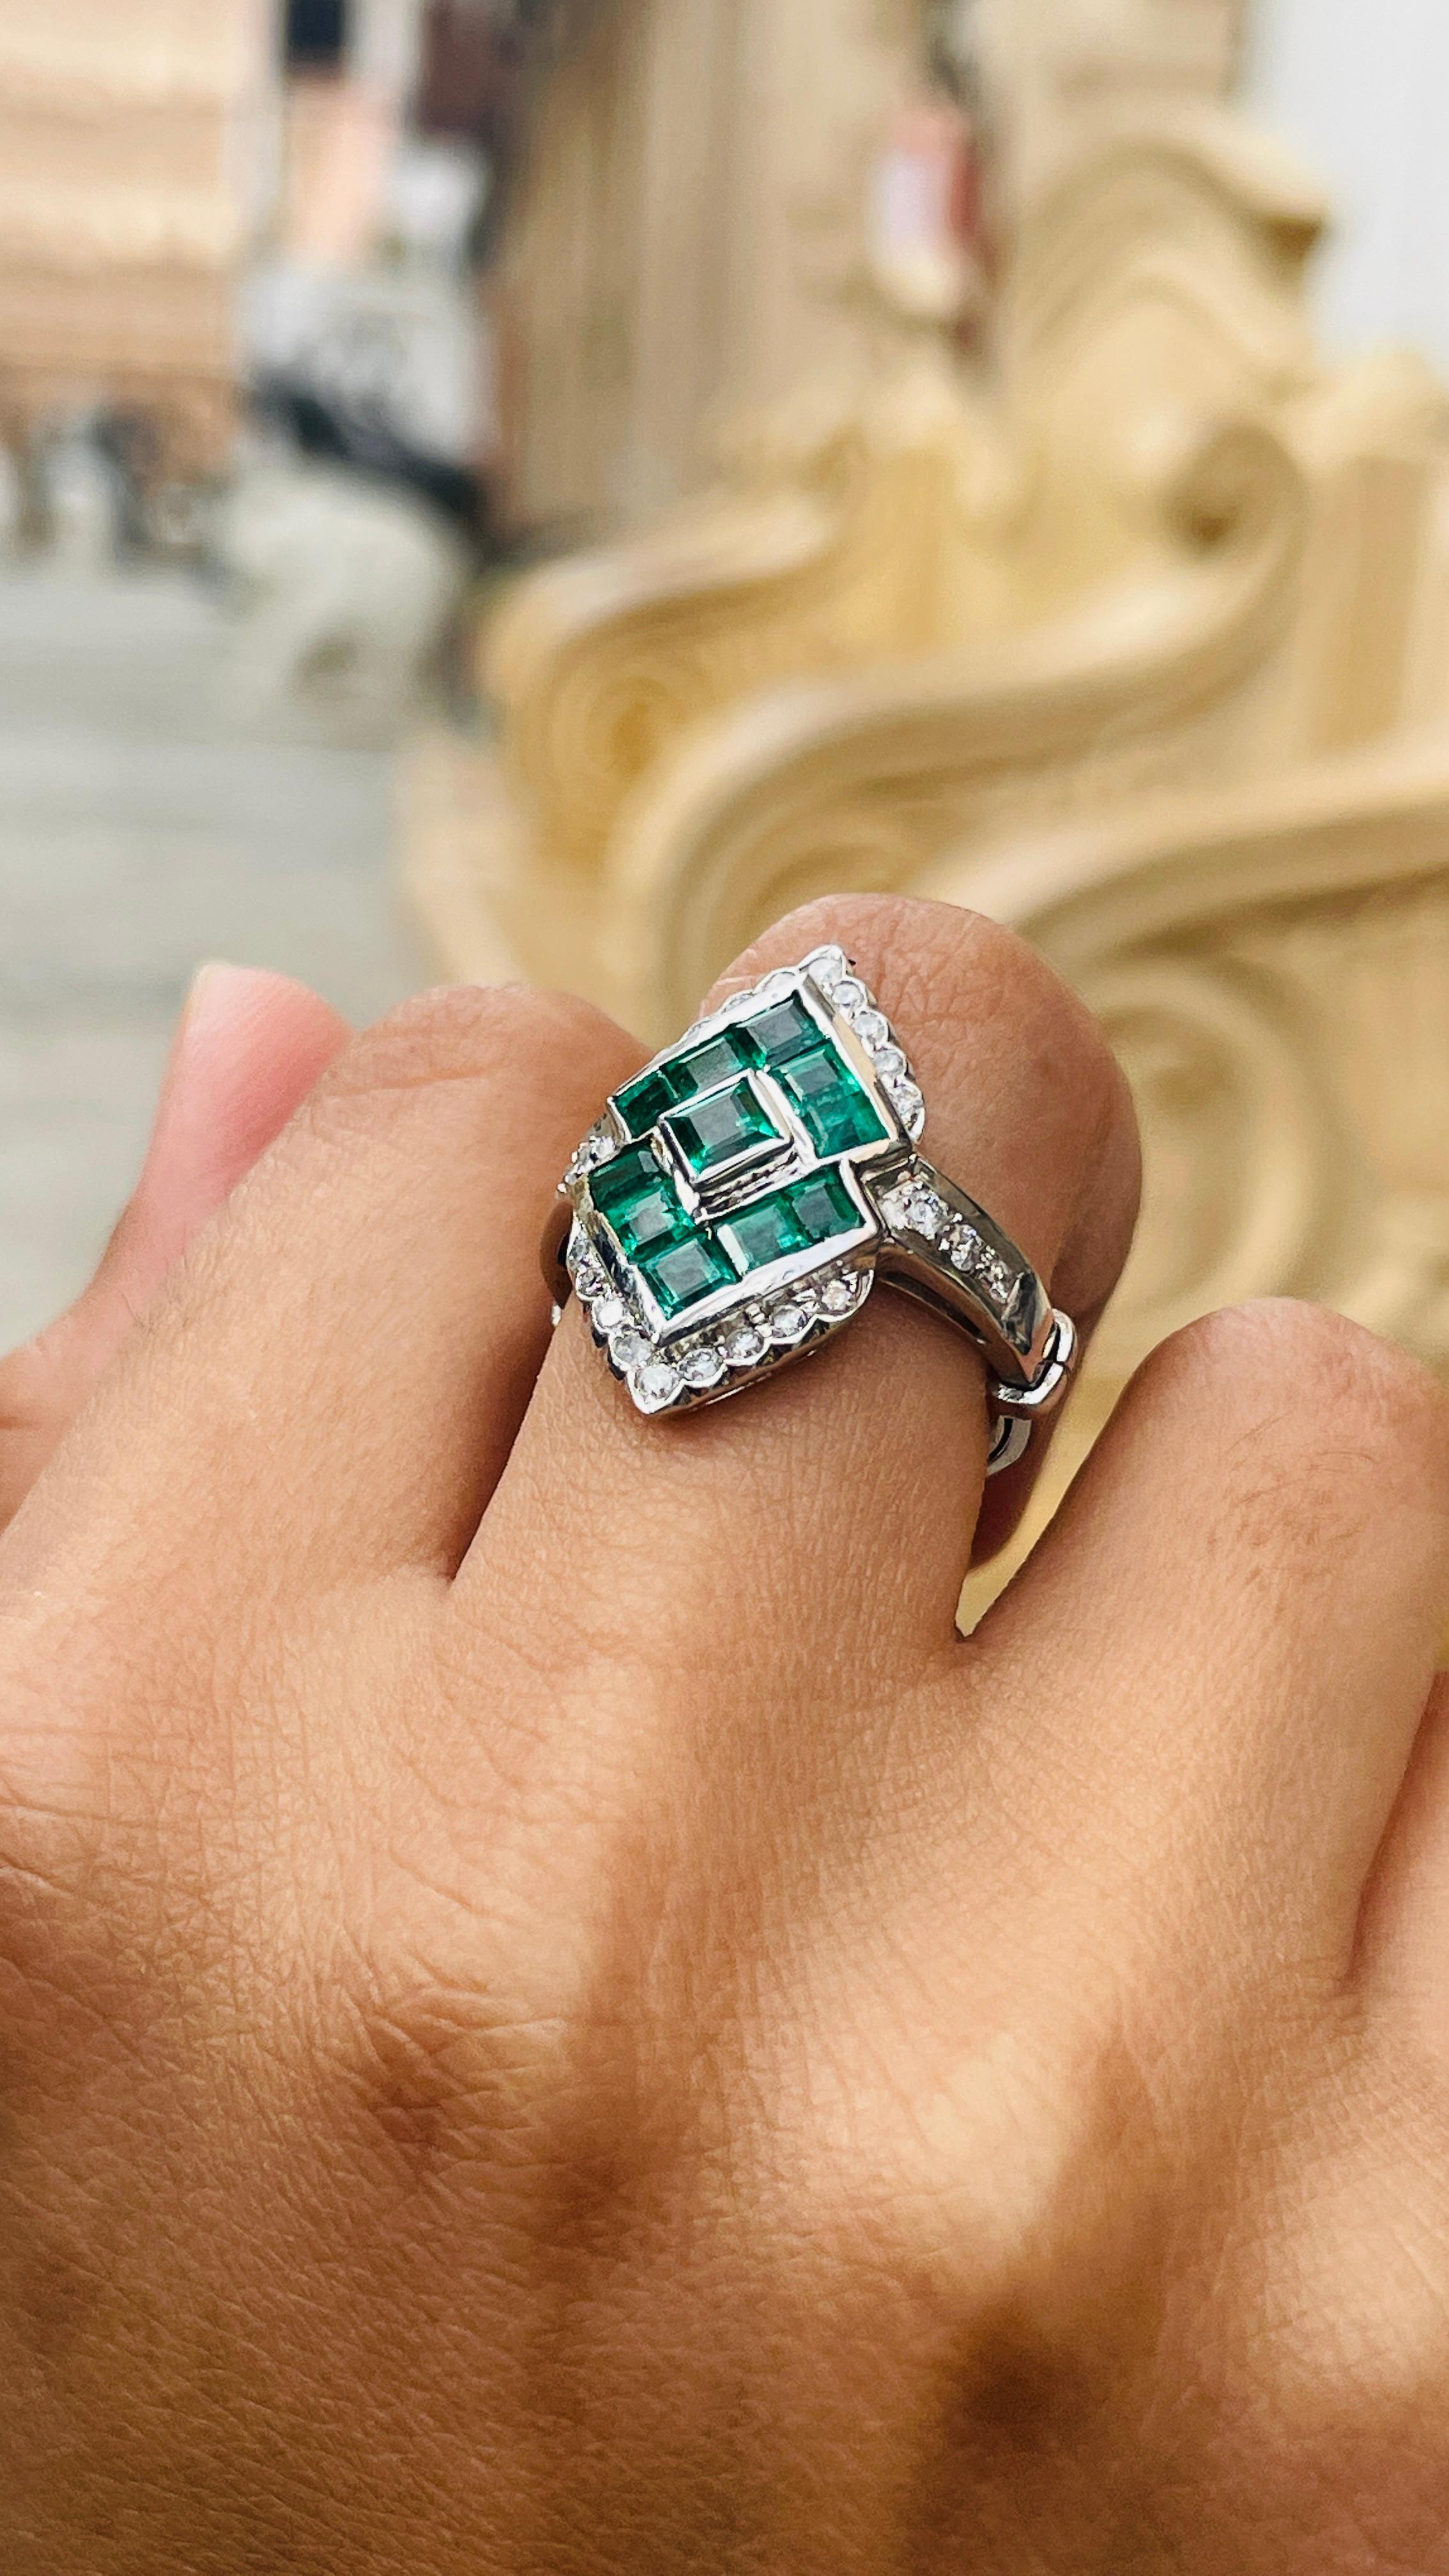 For Sale:  18k Solid White Gold Emerald Diamond Ring, Fine Emerald Ring 8